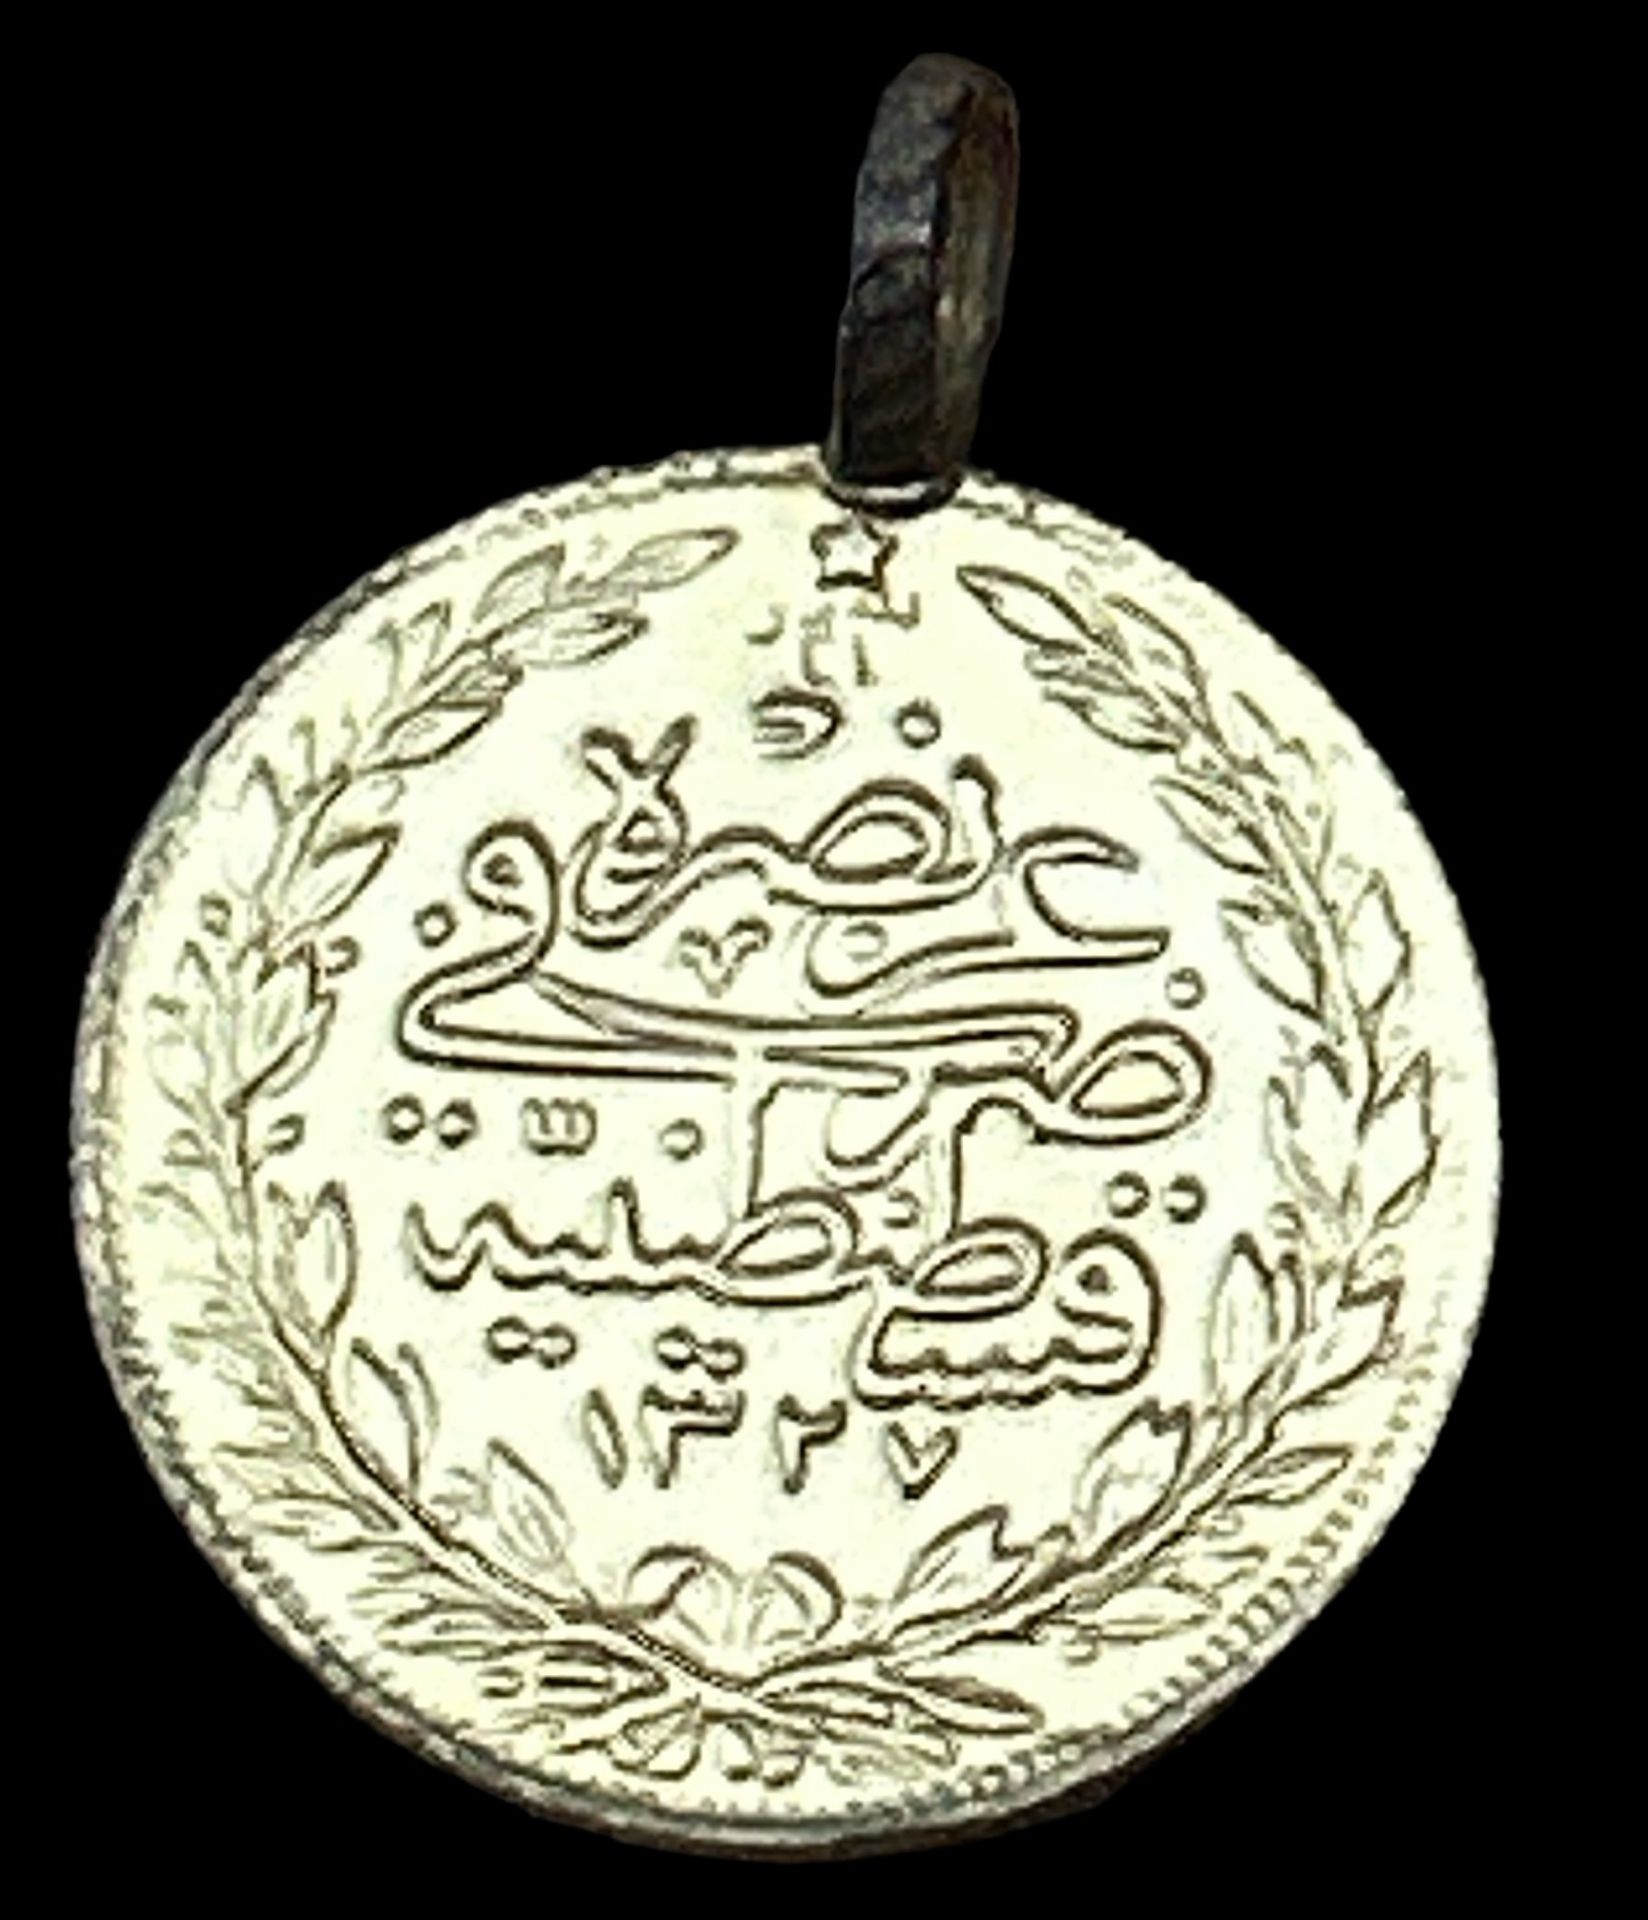 Münzanhänger Gold-916-, 100 Piaster, Türkei, gehenkelt, Öse unechtes Material, zus. 7,4 gr. D-ca. 2 - Image 4 of 5